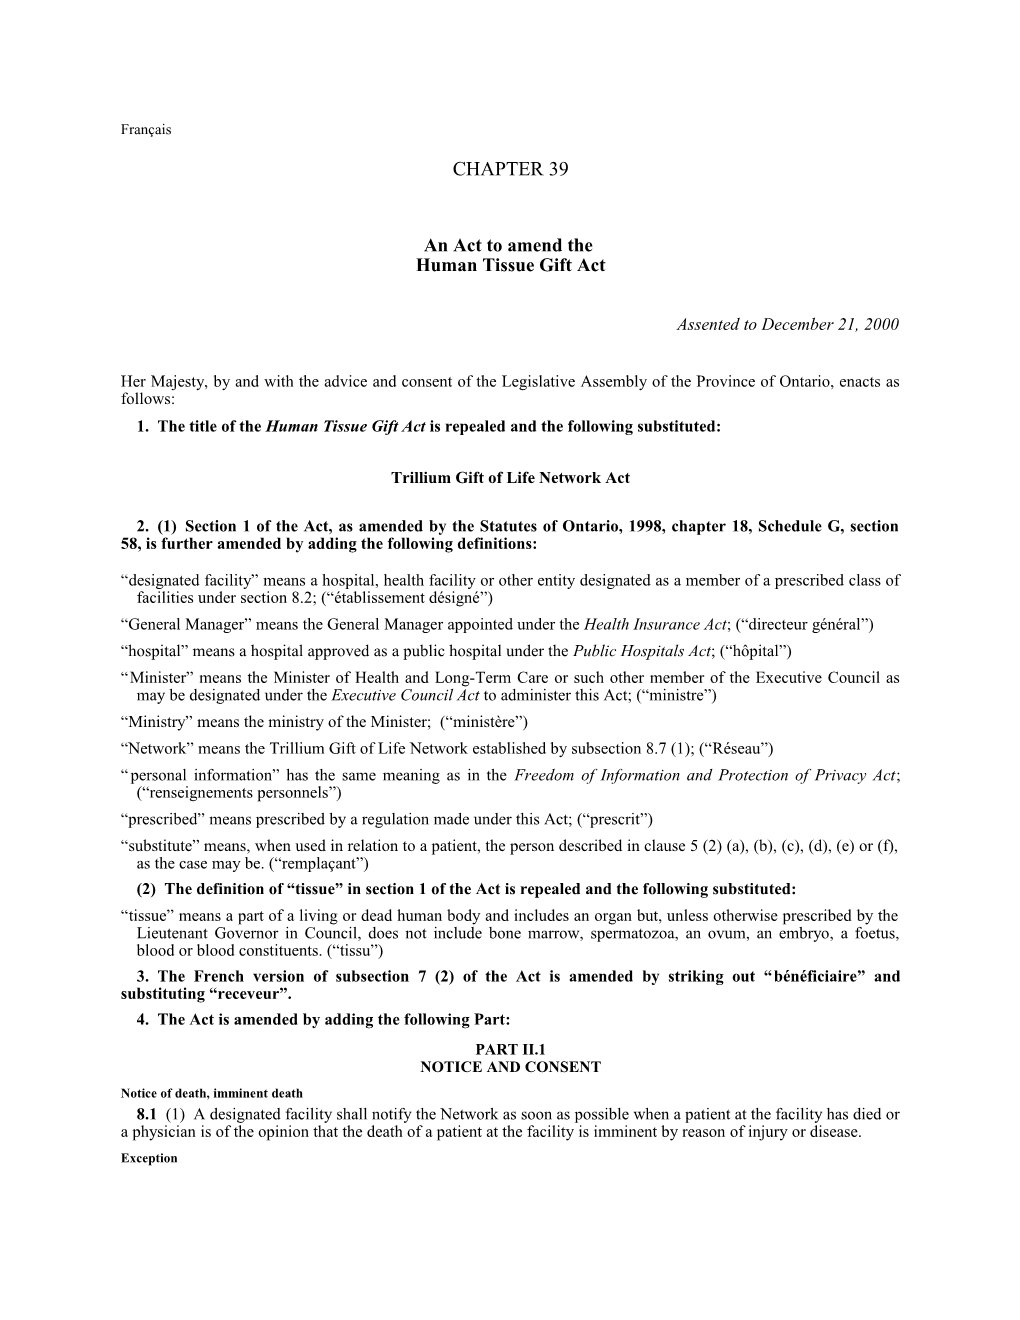 Human Tissue Gift Amendment Act (Trillium Gift of Life Network), 2000, S.O. 2000, C. 39